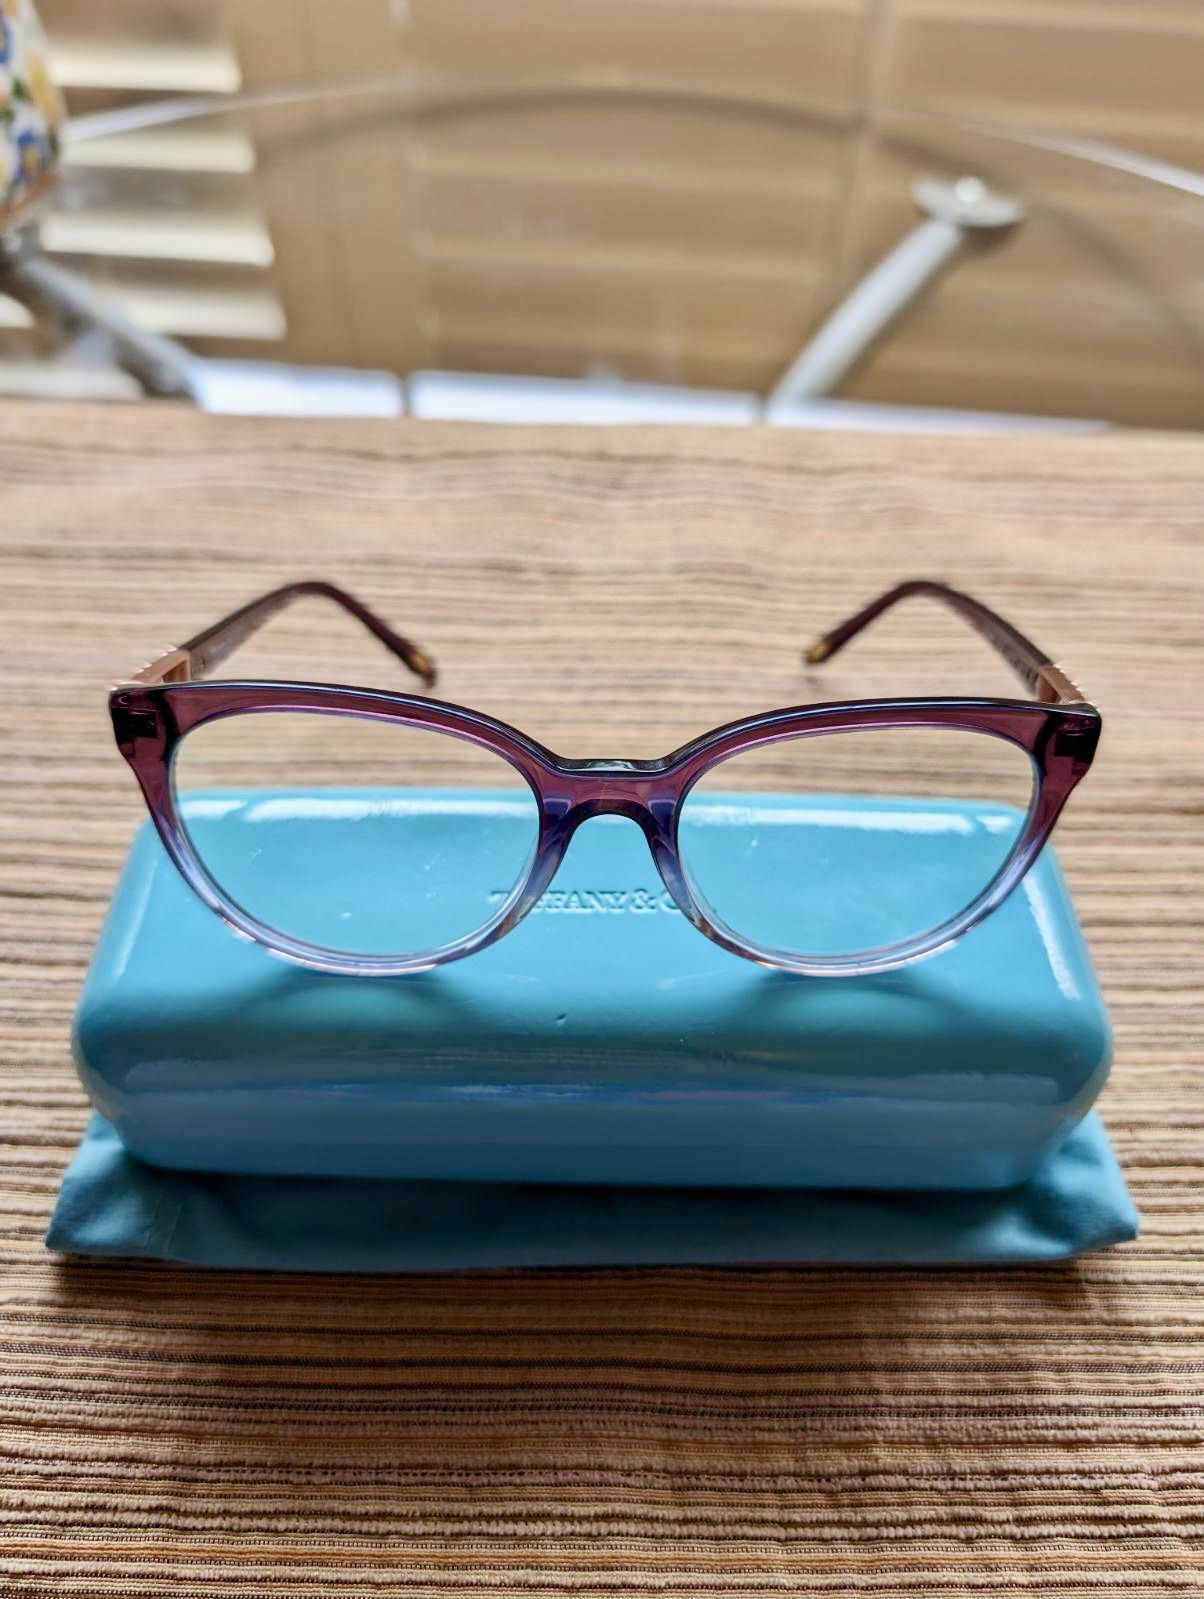 Tiffany Eyeglasses for Sale!